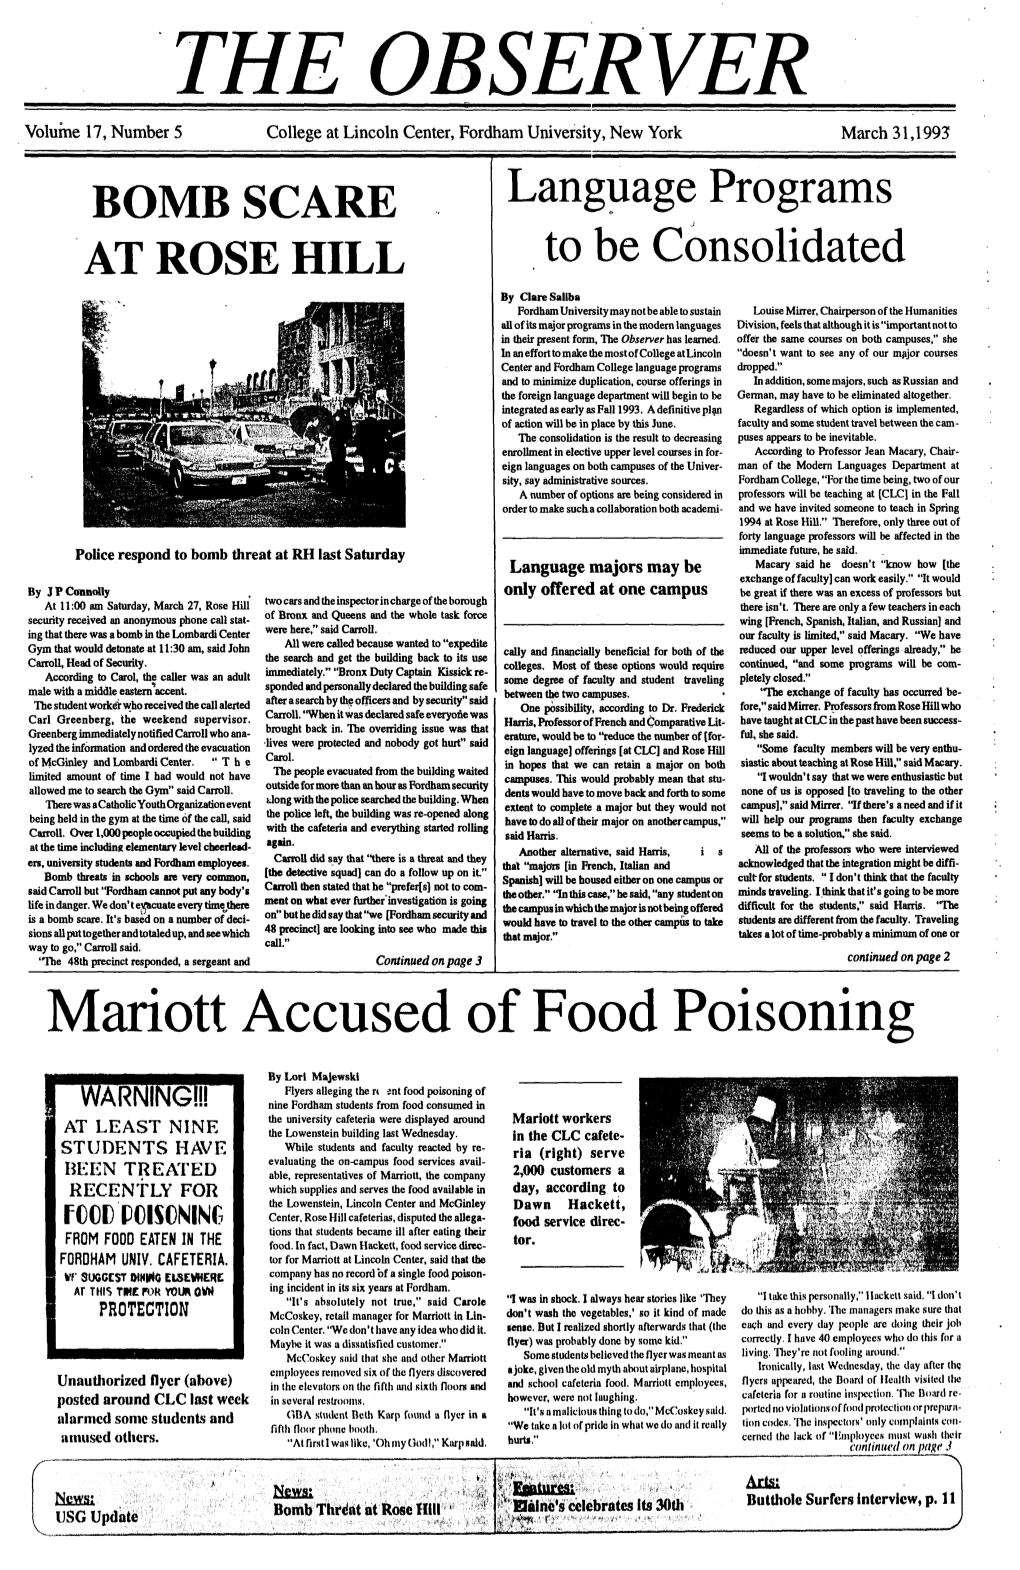 Mariott Accused of Food Poisoning